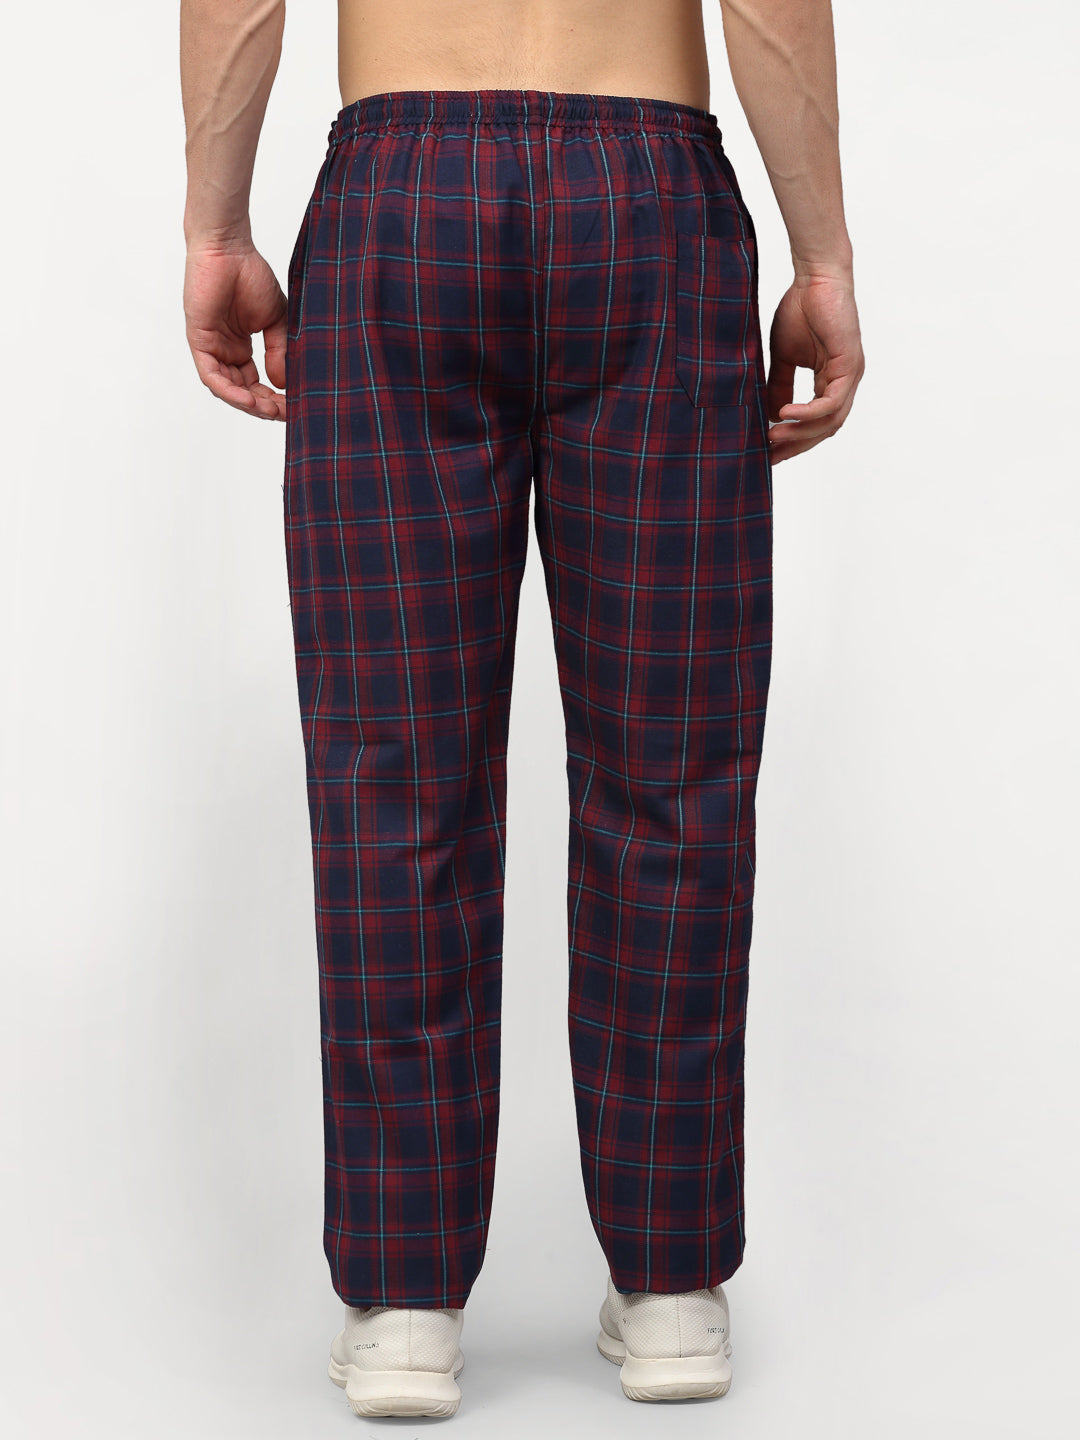 Men's Blue Cotton Checked Track Pants ( JOG 018Blue-Red ) - Jainish